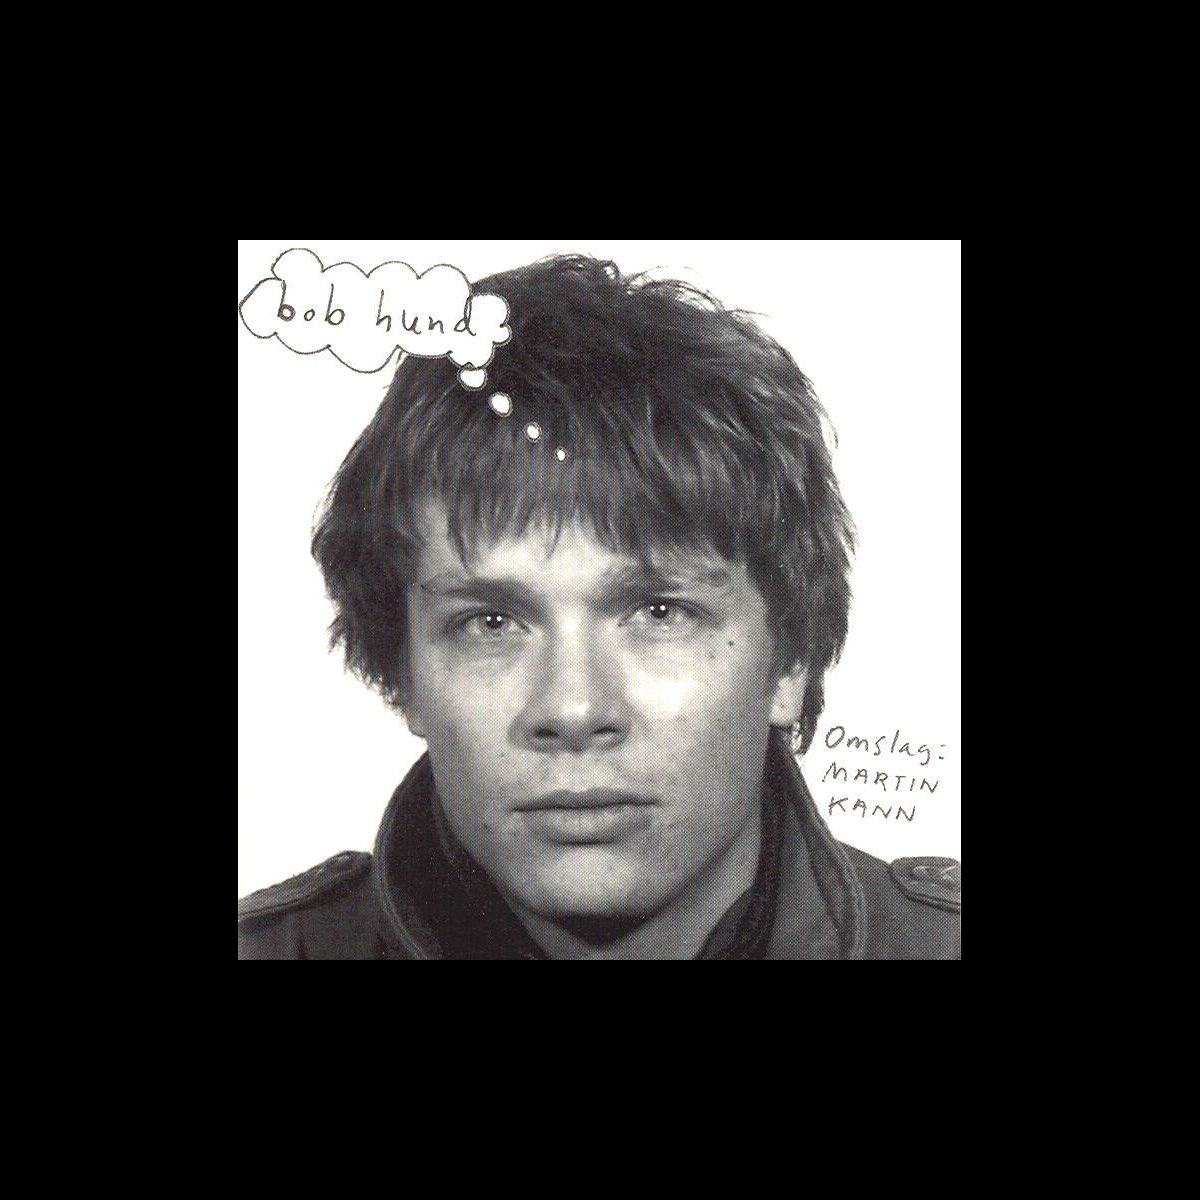 Omslag: Martin Kann - Album by Bob Hund - Apple Music